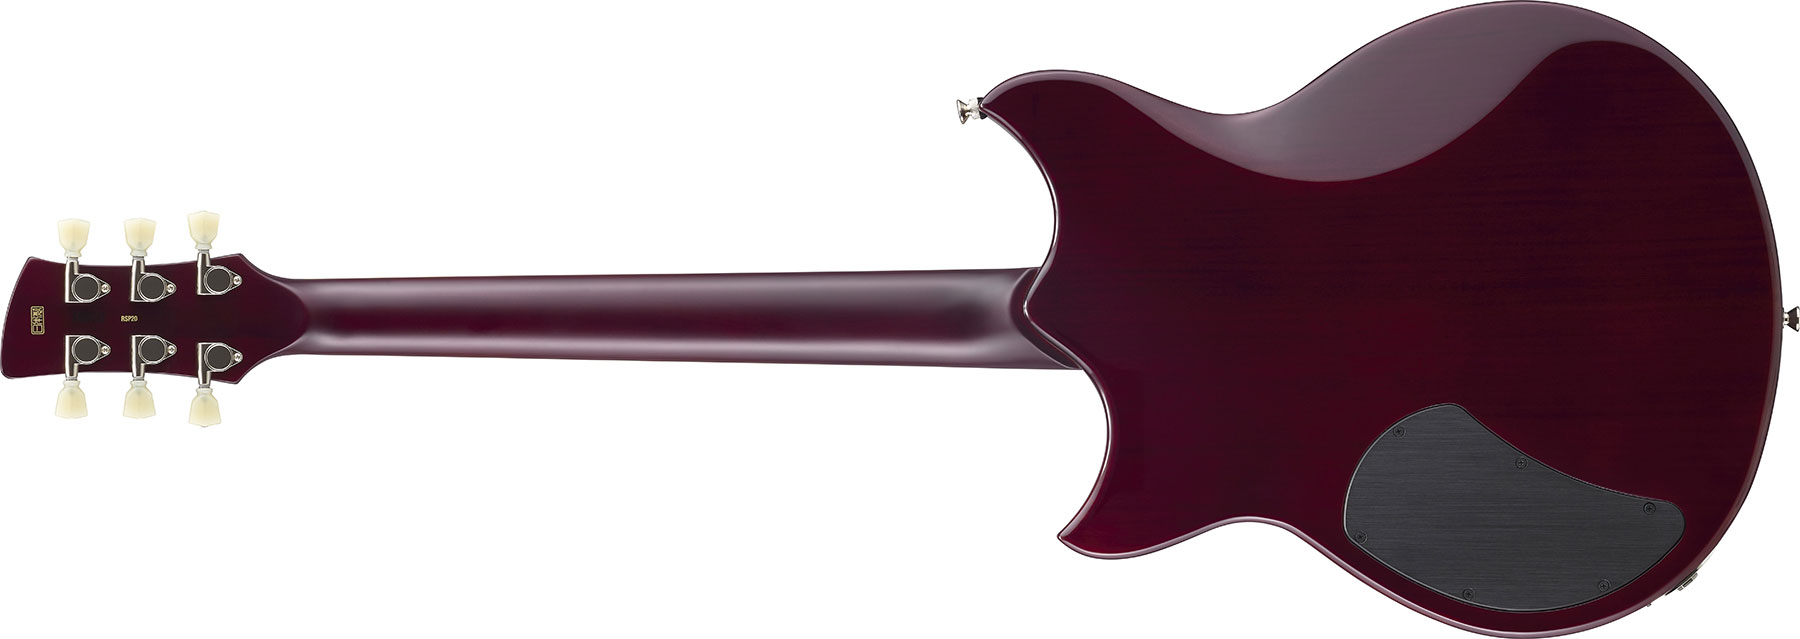 Yamaha Rss02t Revstar Standard 2p90 Ht Rw - Swift Blue - Guitarra eléctrica de doble corte - Variation 2